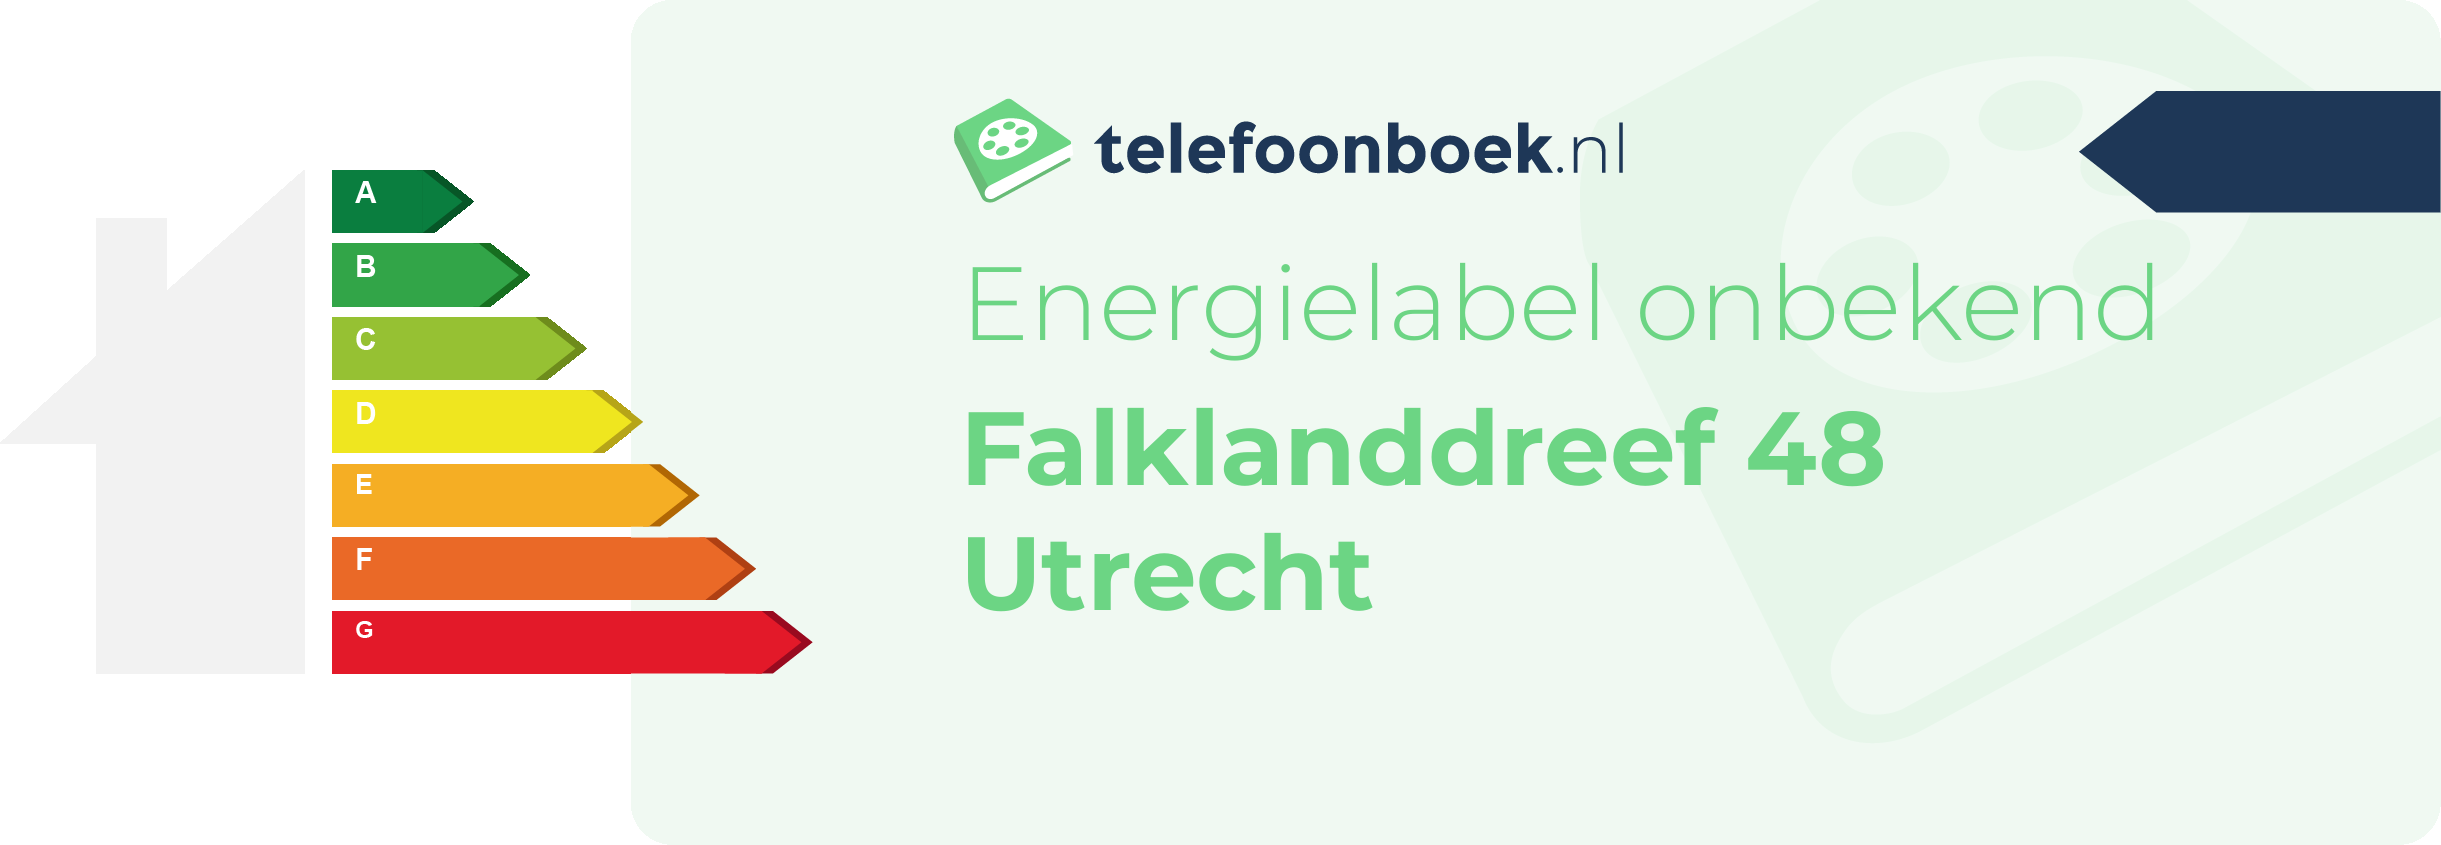 Energielabel Falklanddreef 48 Utrecht